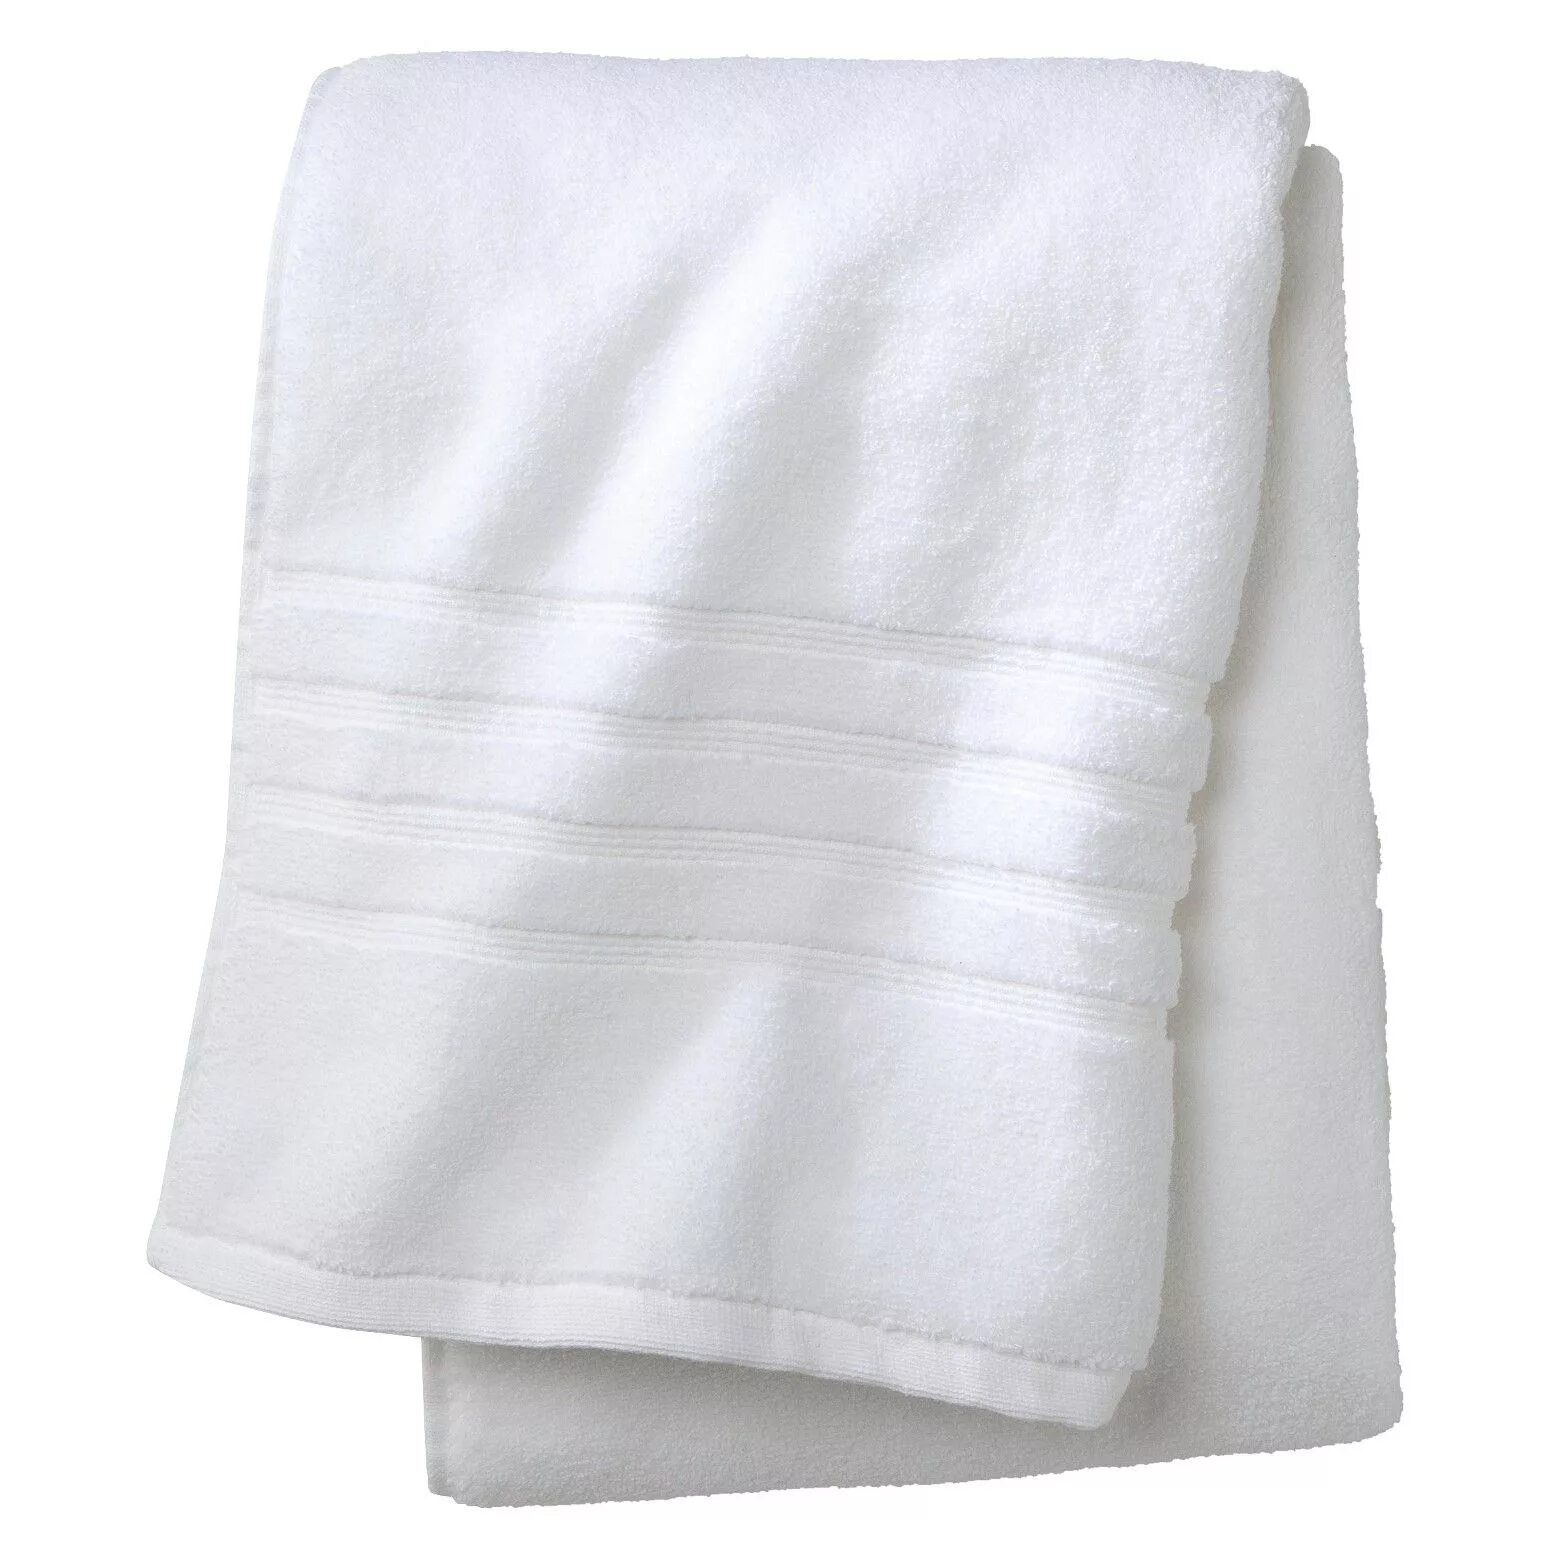 White полотенца. Белое полотенце. Полотенце махровое белый. Полотенце на белом фоне. Белоснежные полотенца.